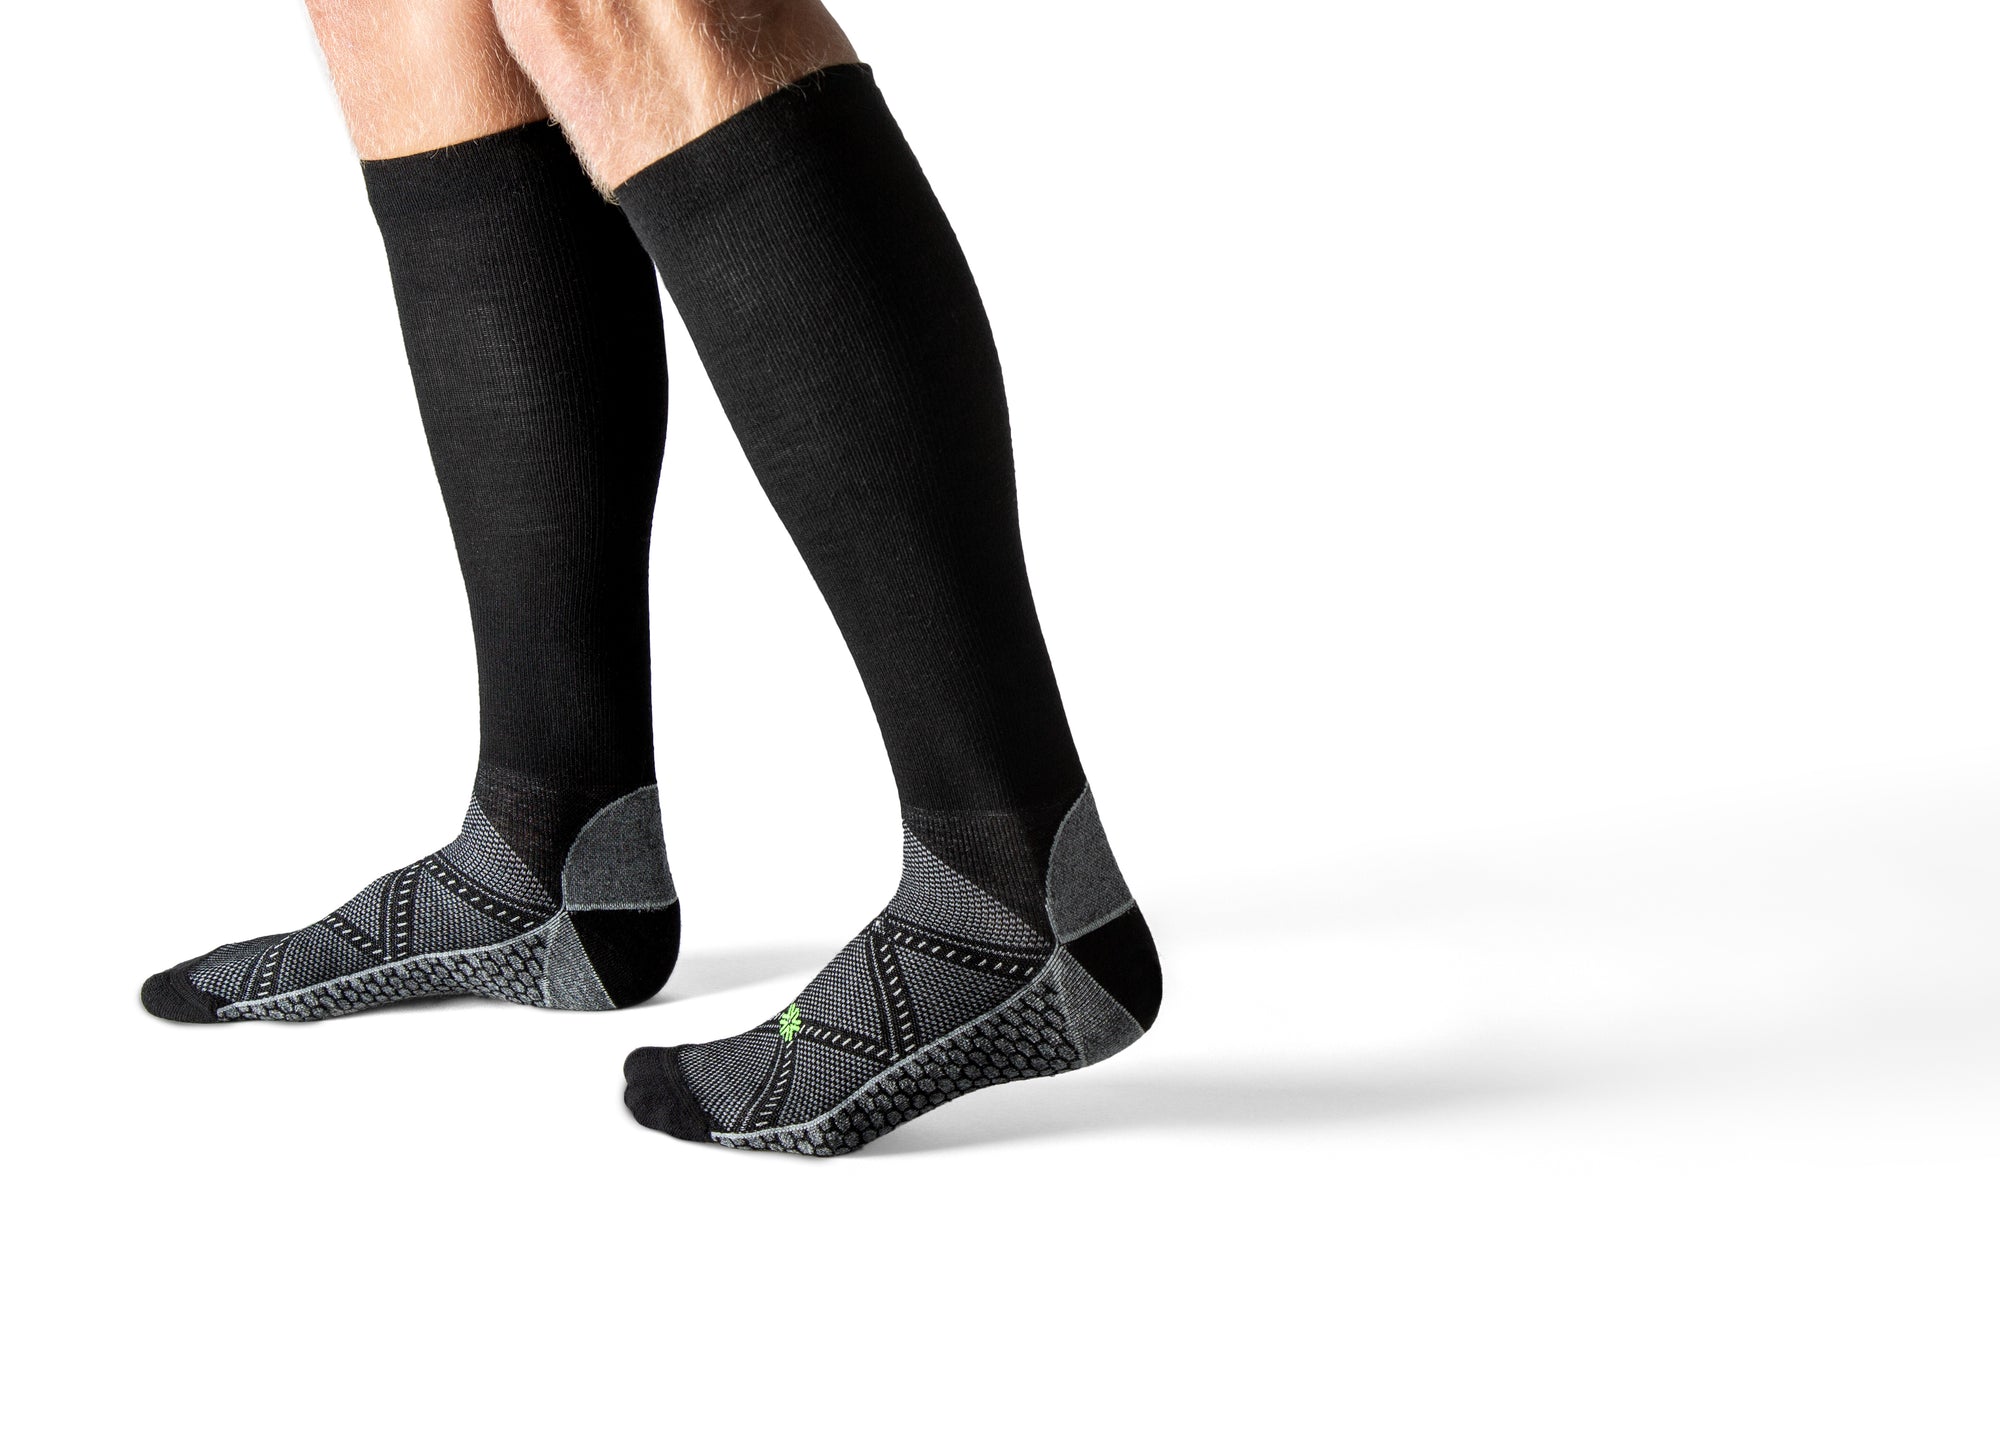 Choosing the Best Compression Socks - Vive Health